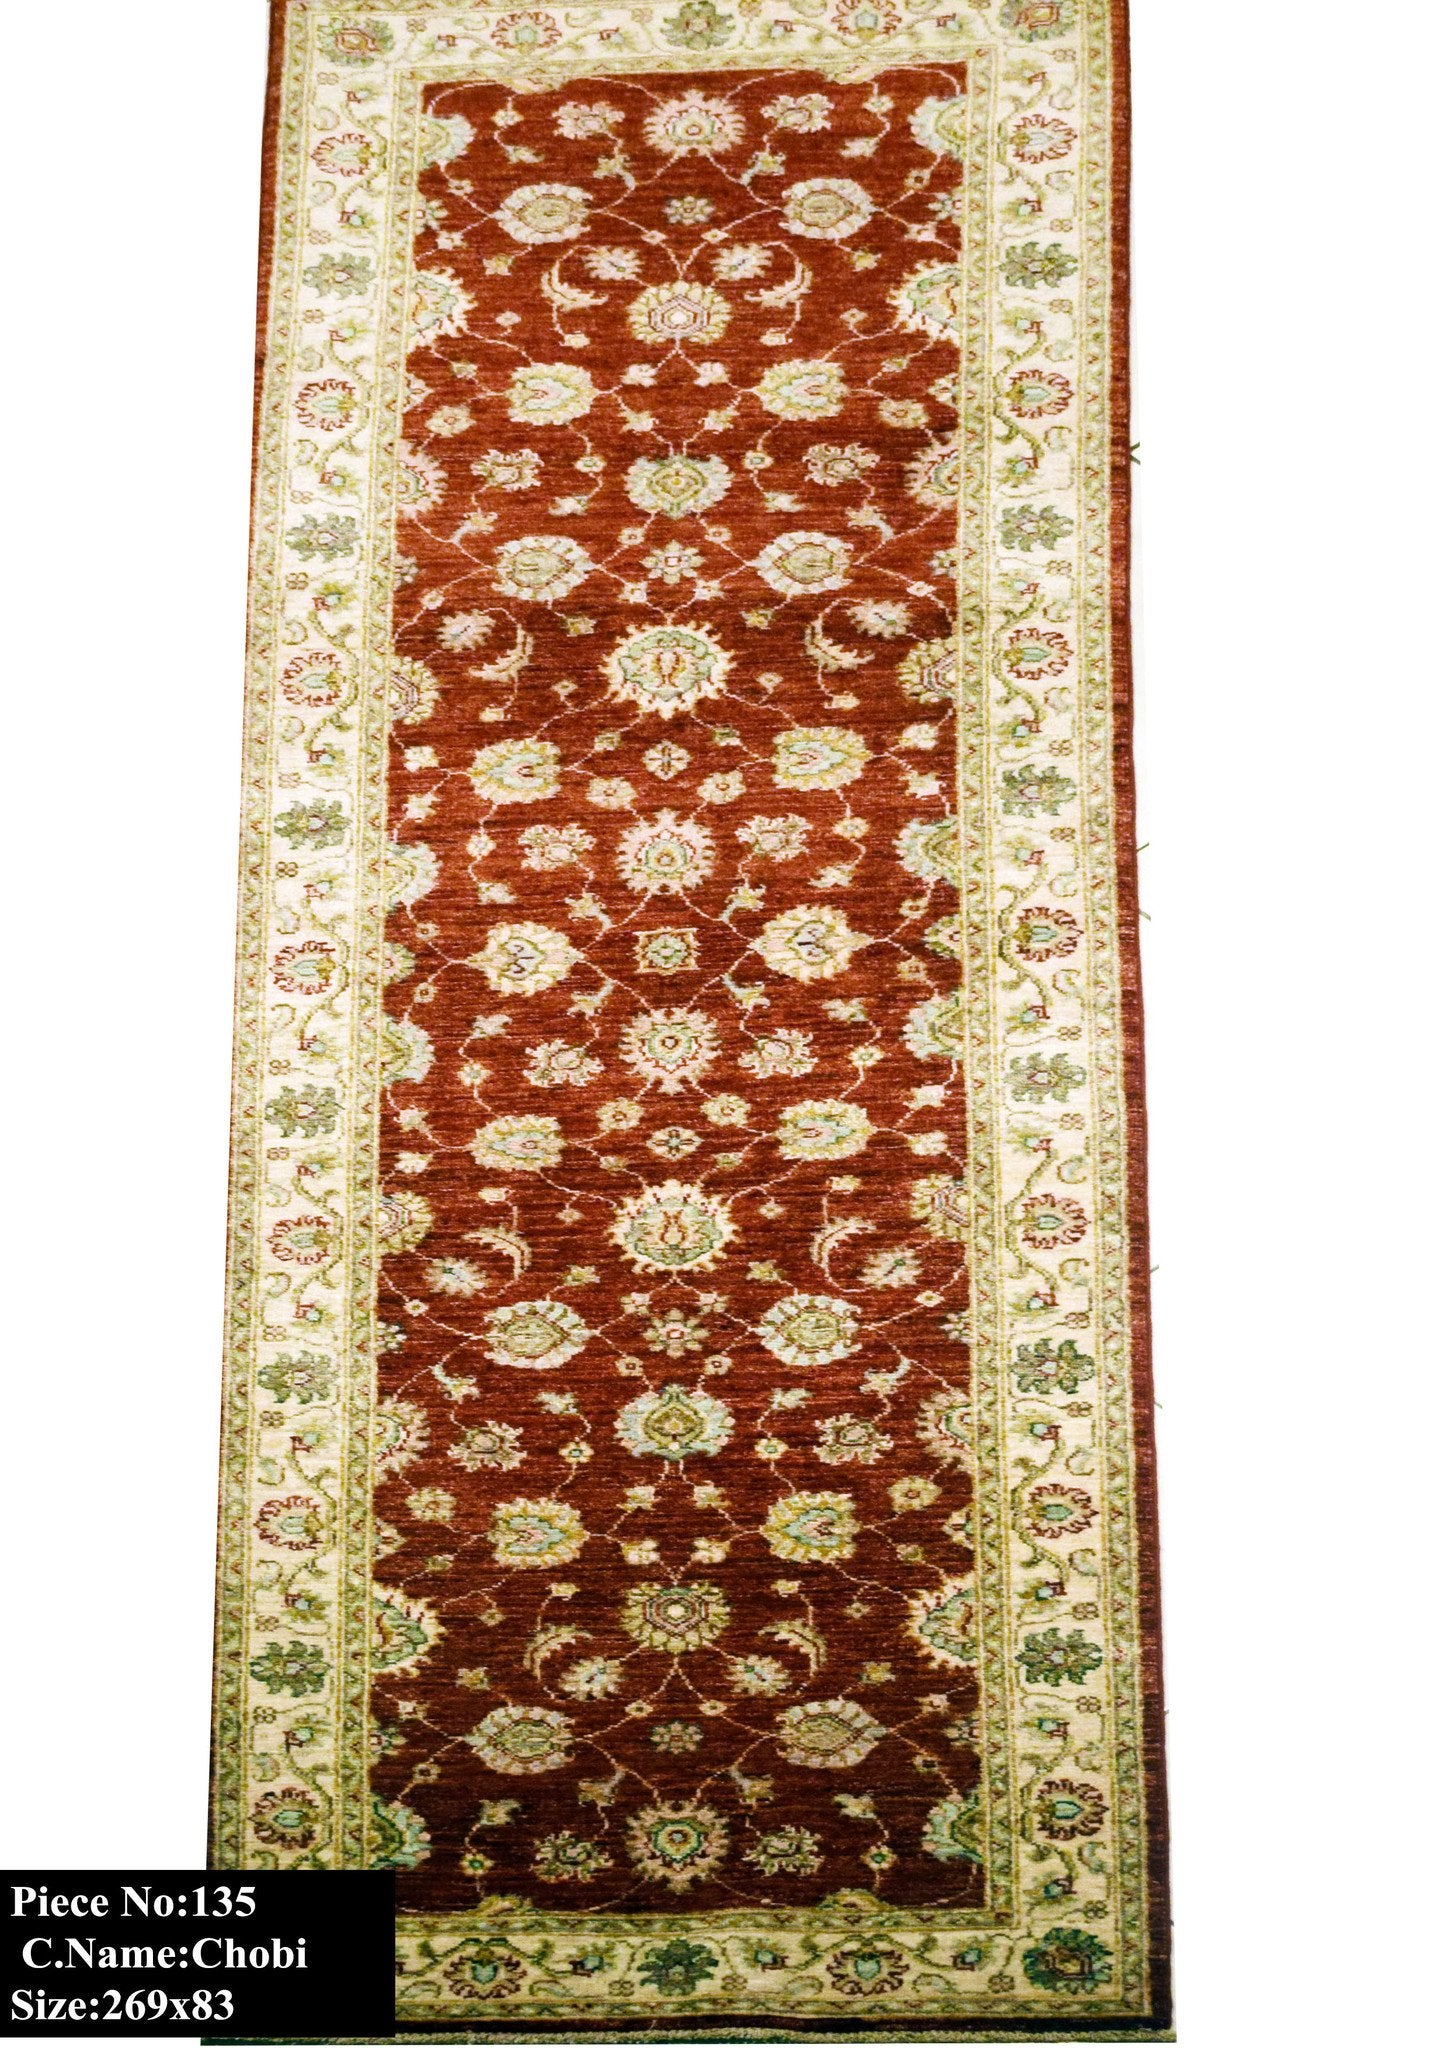 Chobi 269x83 - Omid Carpets